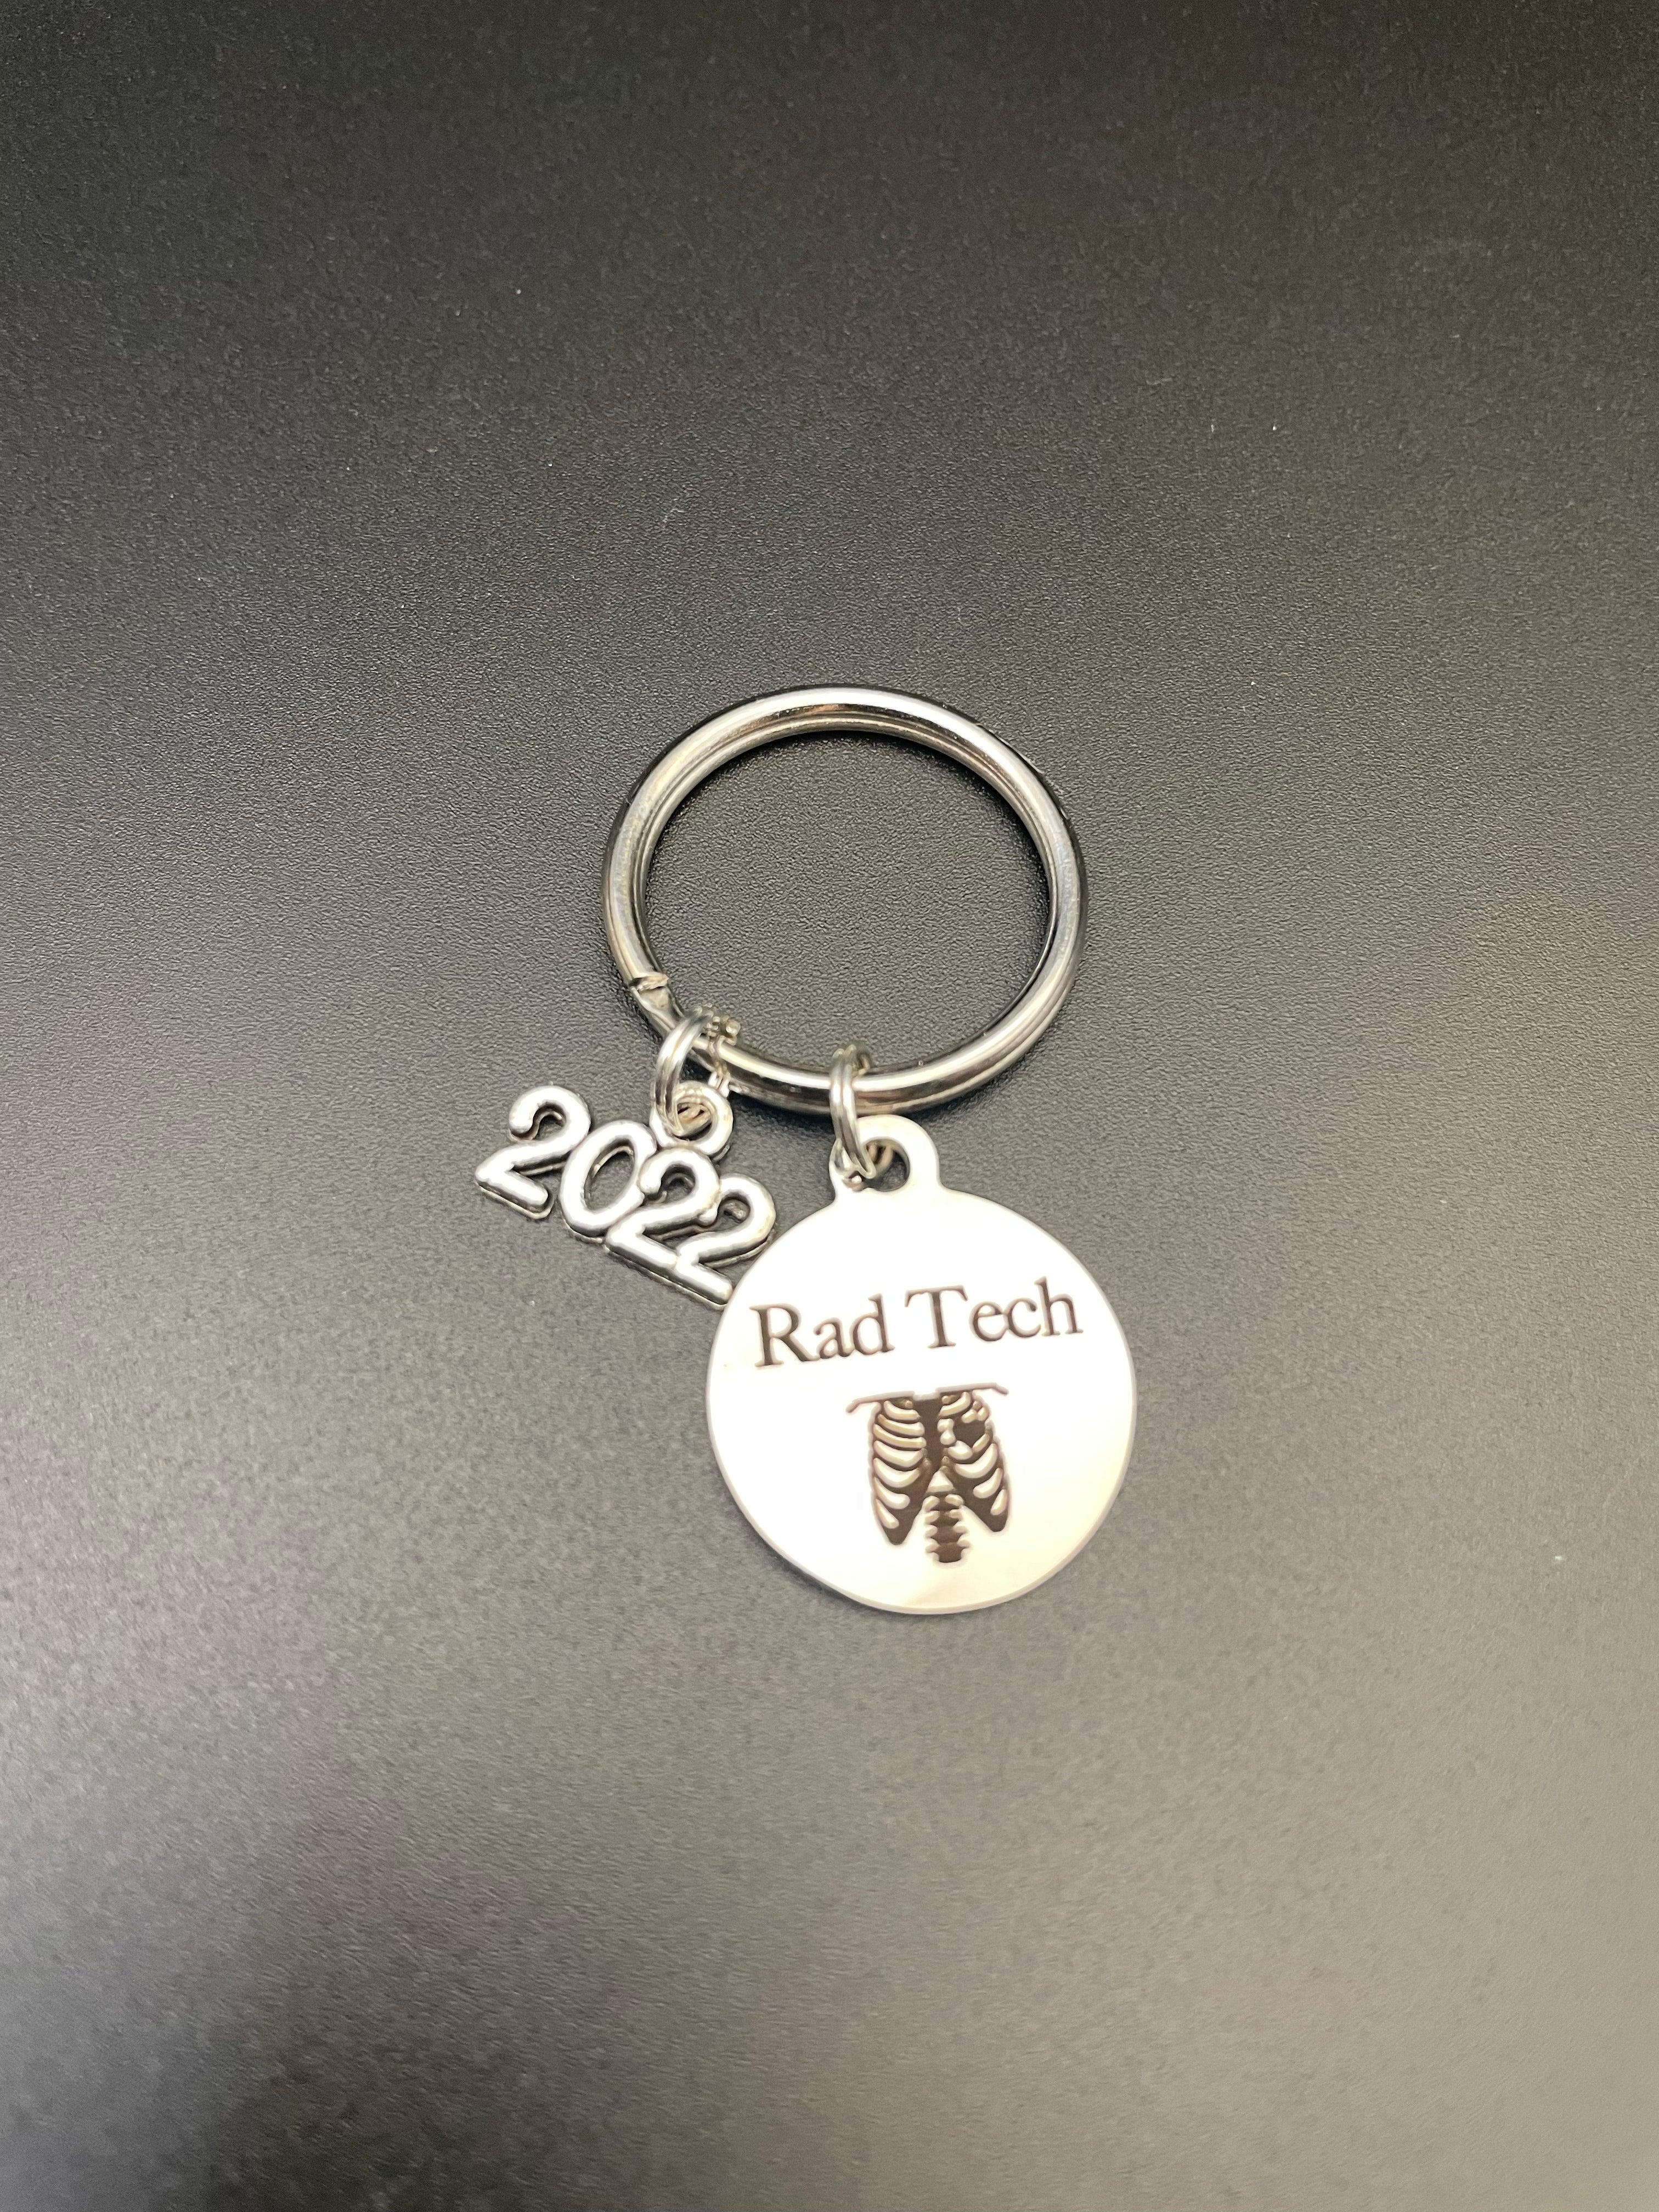 Xray Tech Graduation Gift, 2022, X-ray Tech Keychain, Radiology, Rad Tech